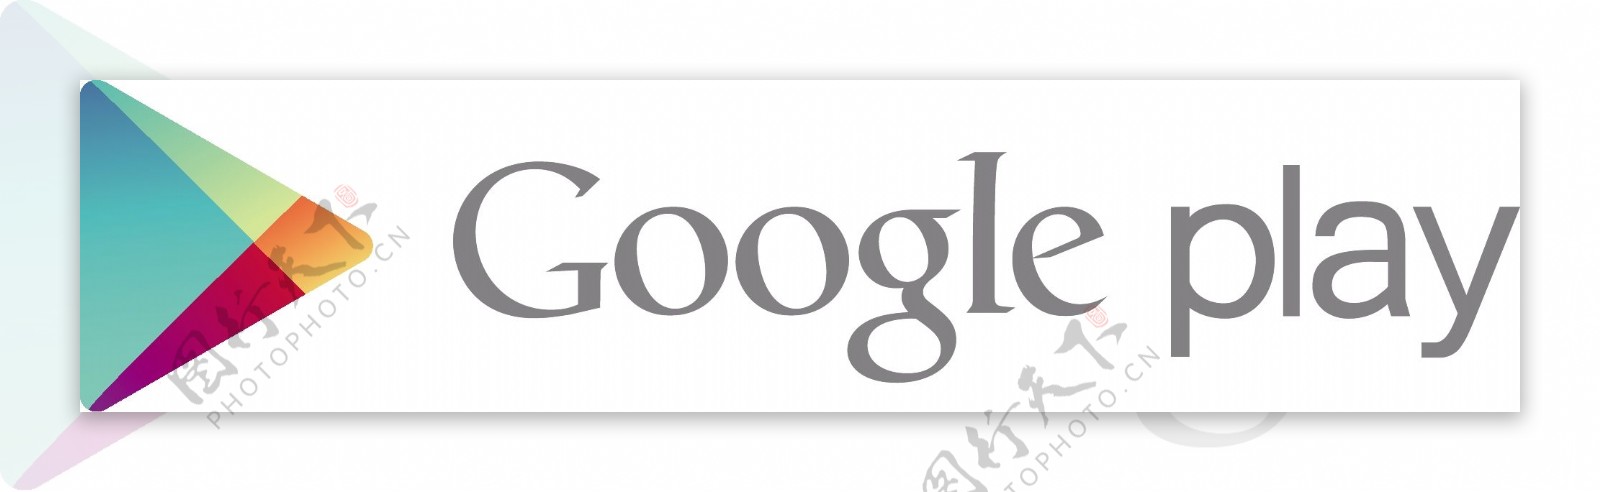 Googleplay矢量logo标志